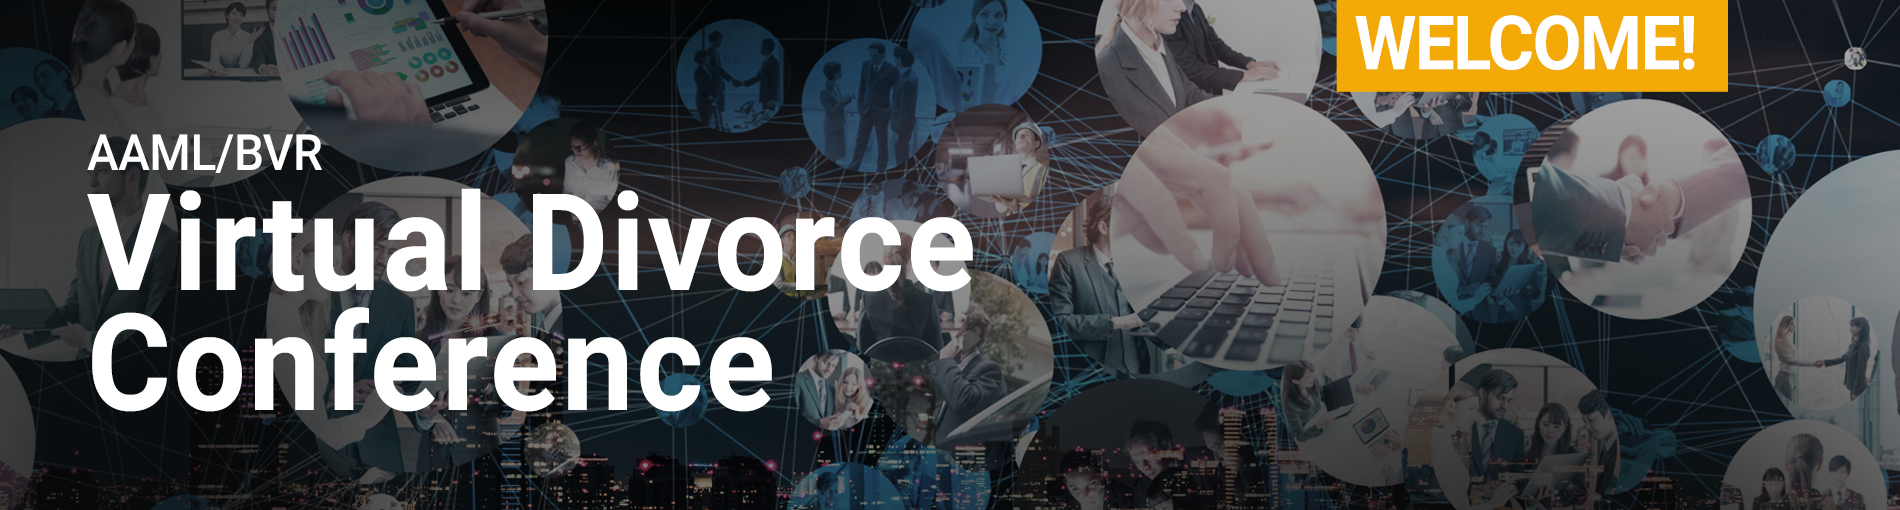 Virtual Divorce Conference 2020